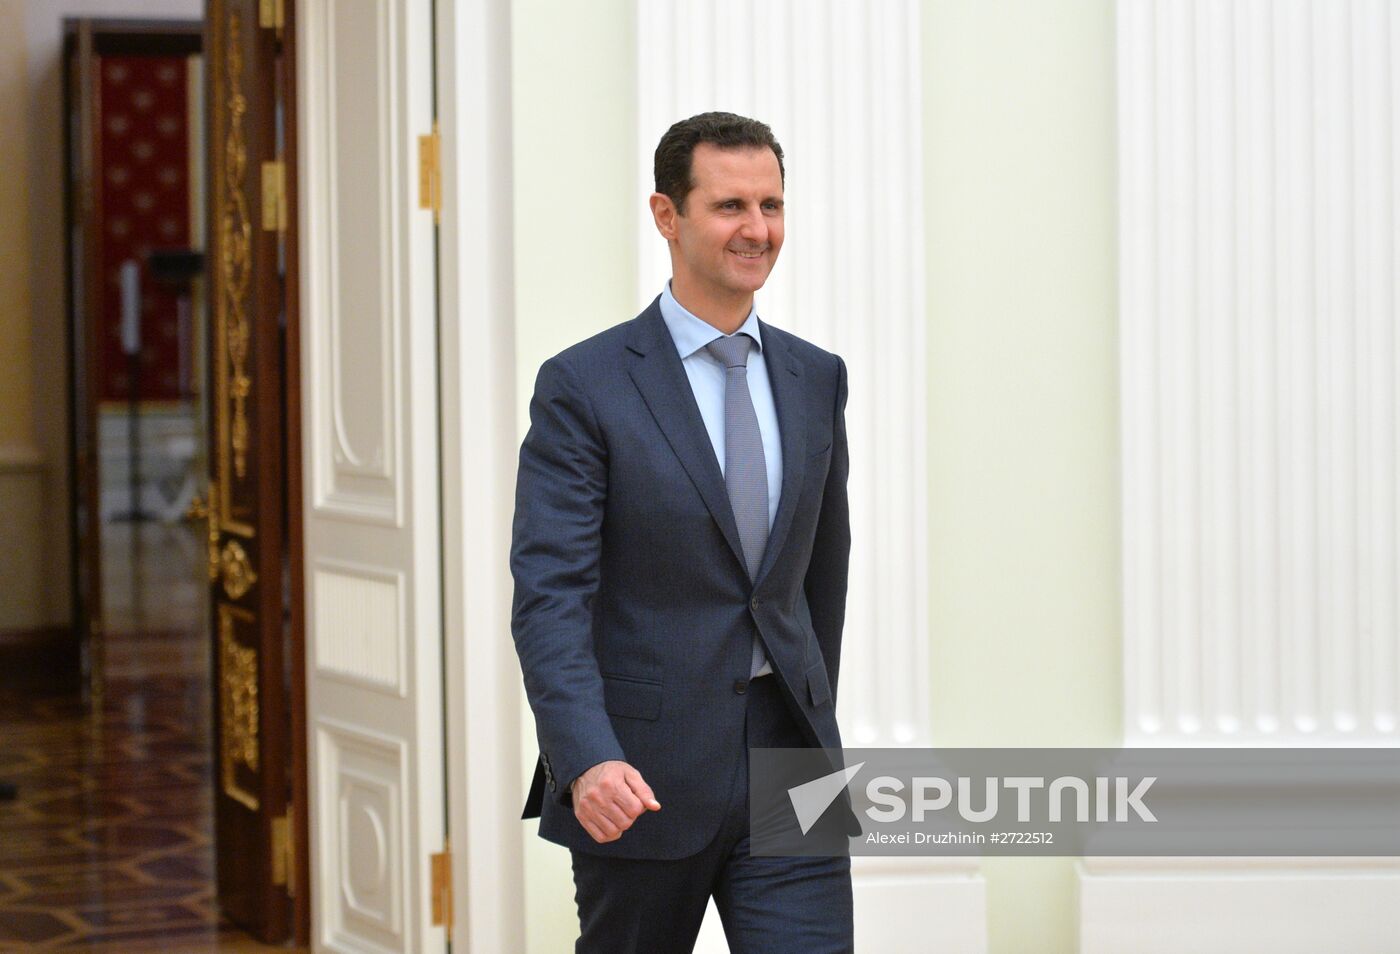 President Vladimir Putin meets with President of Syria Bashar al-Assad